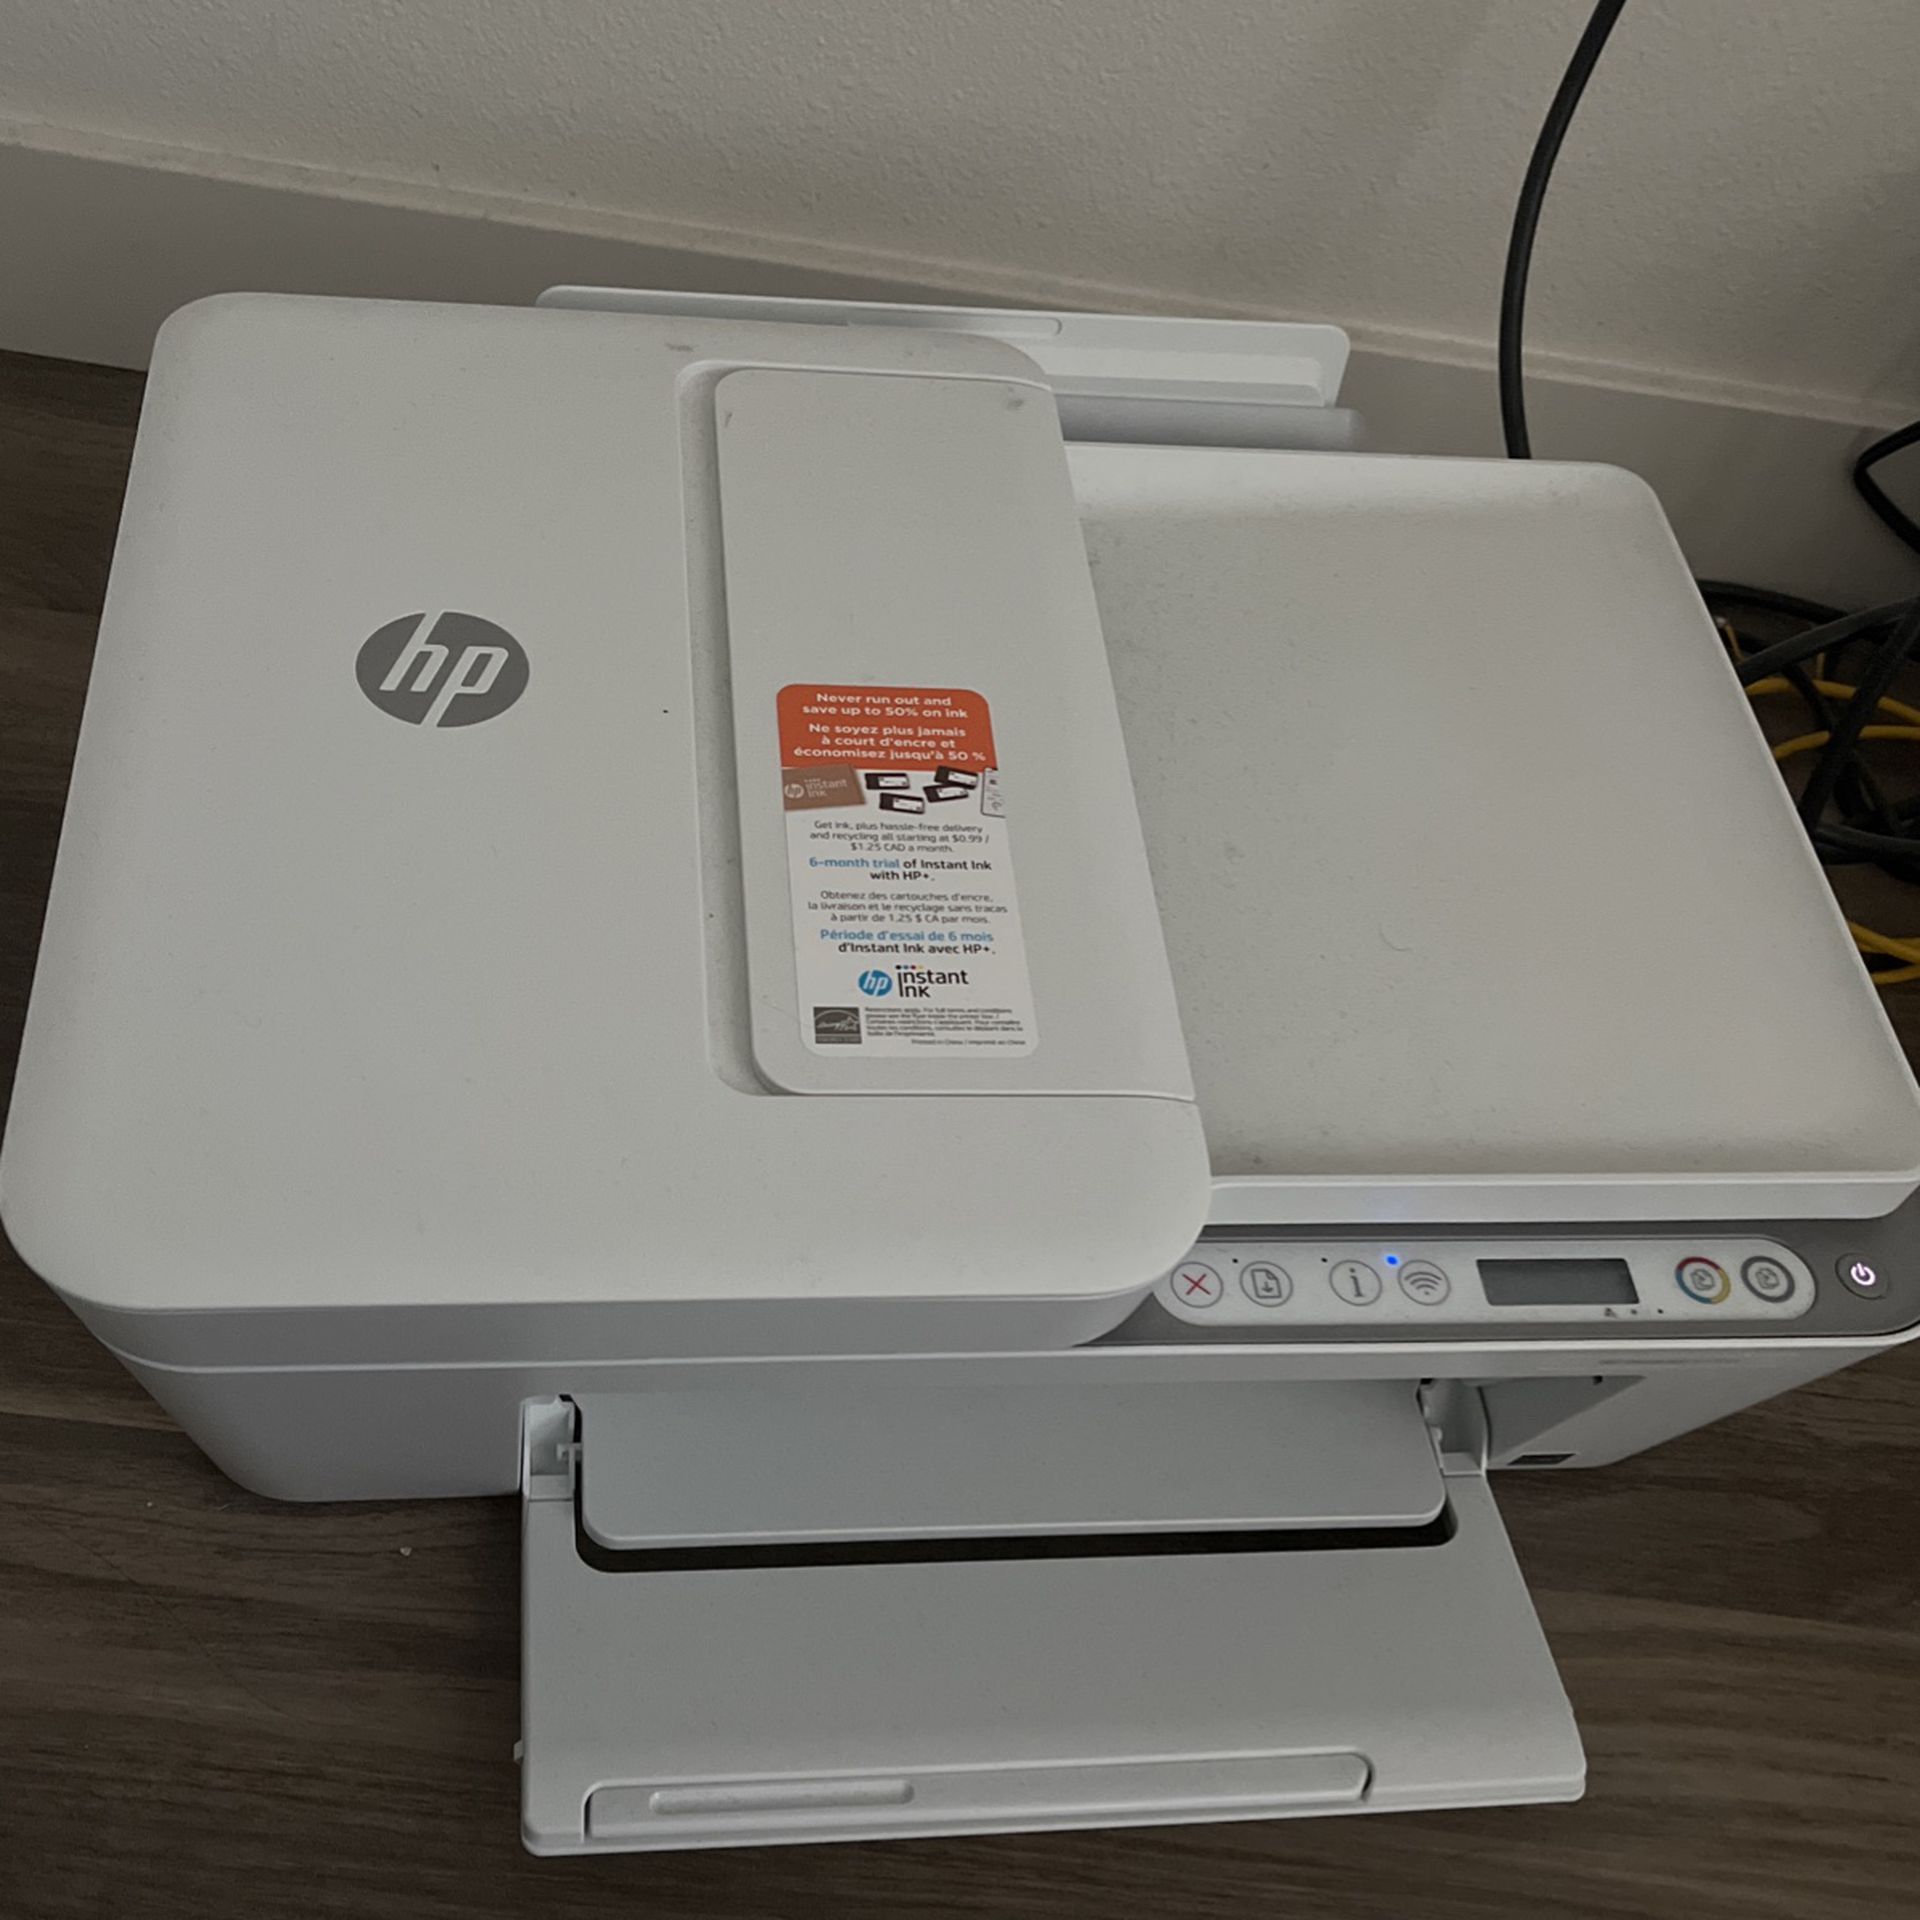 HP 3500 printer 